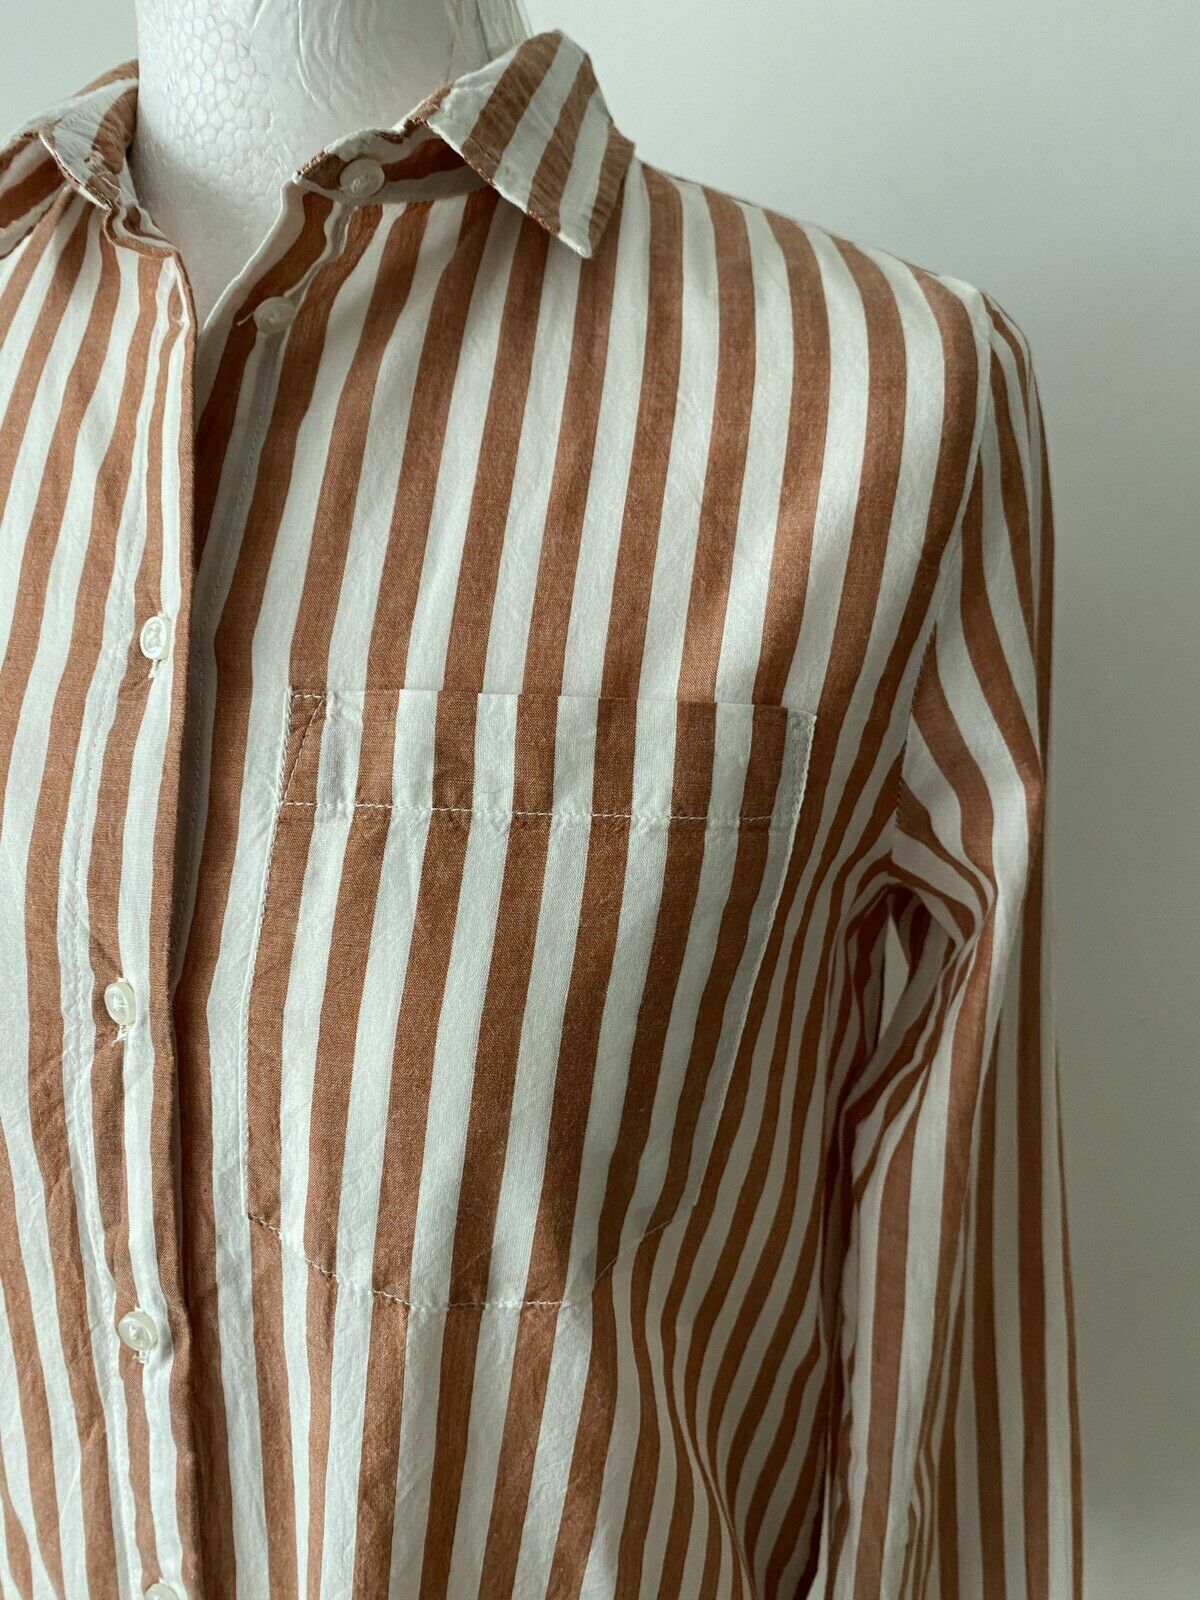 ICHI Striped Cotton Lightweight Shirt Size 6 / 34 Pit to Pit 18"